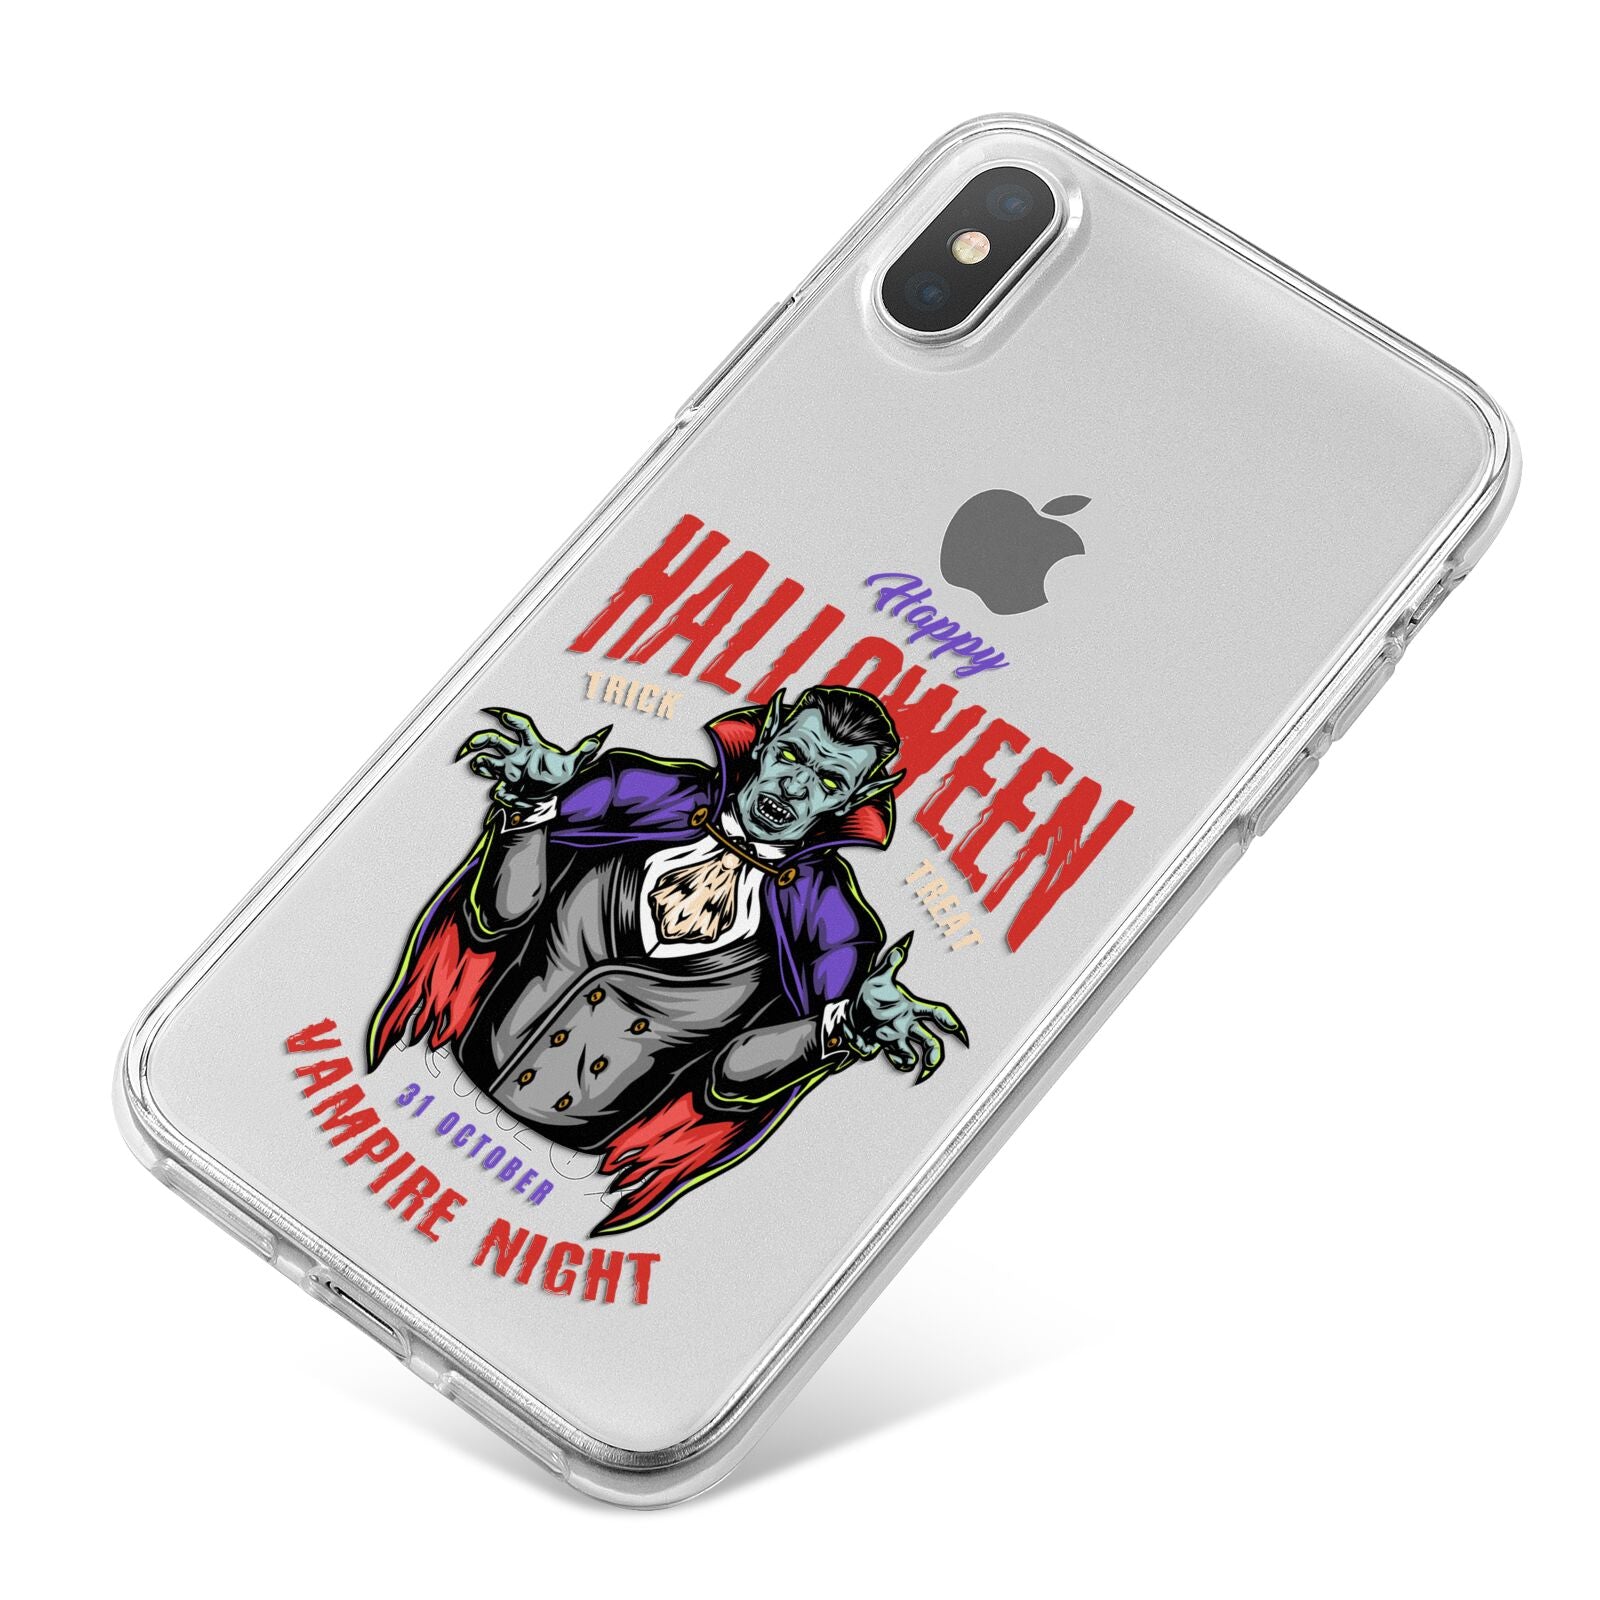 Vampire Night iPhone X Bumper Case on Silver iPhone